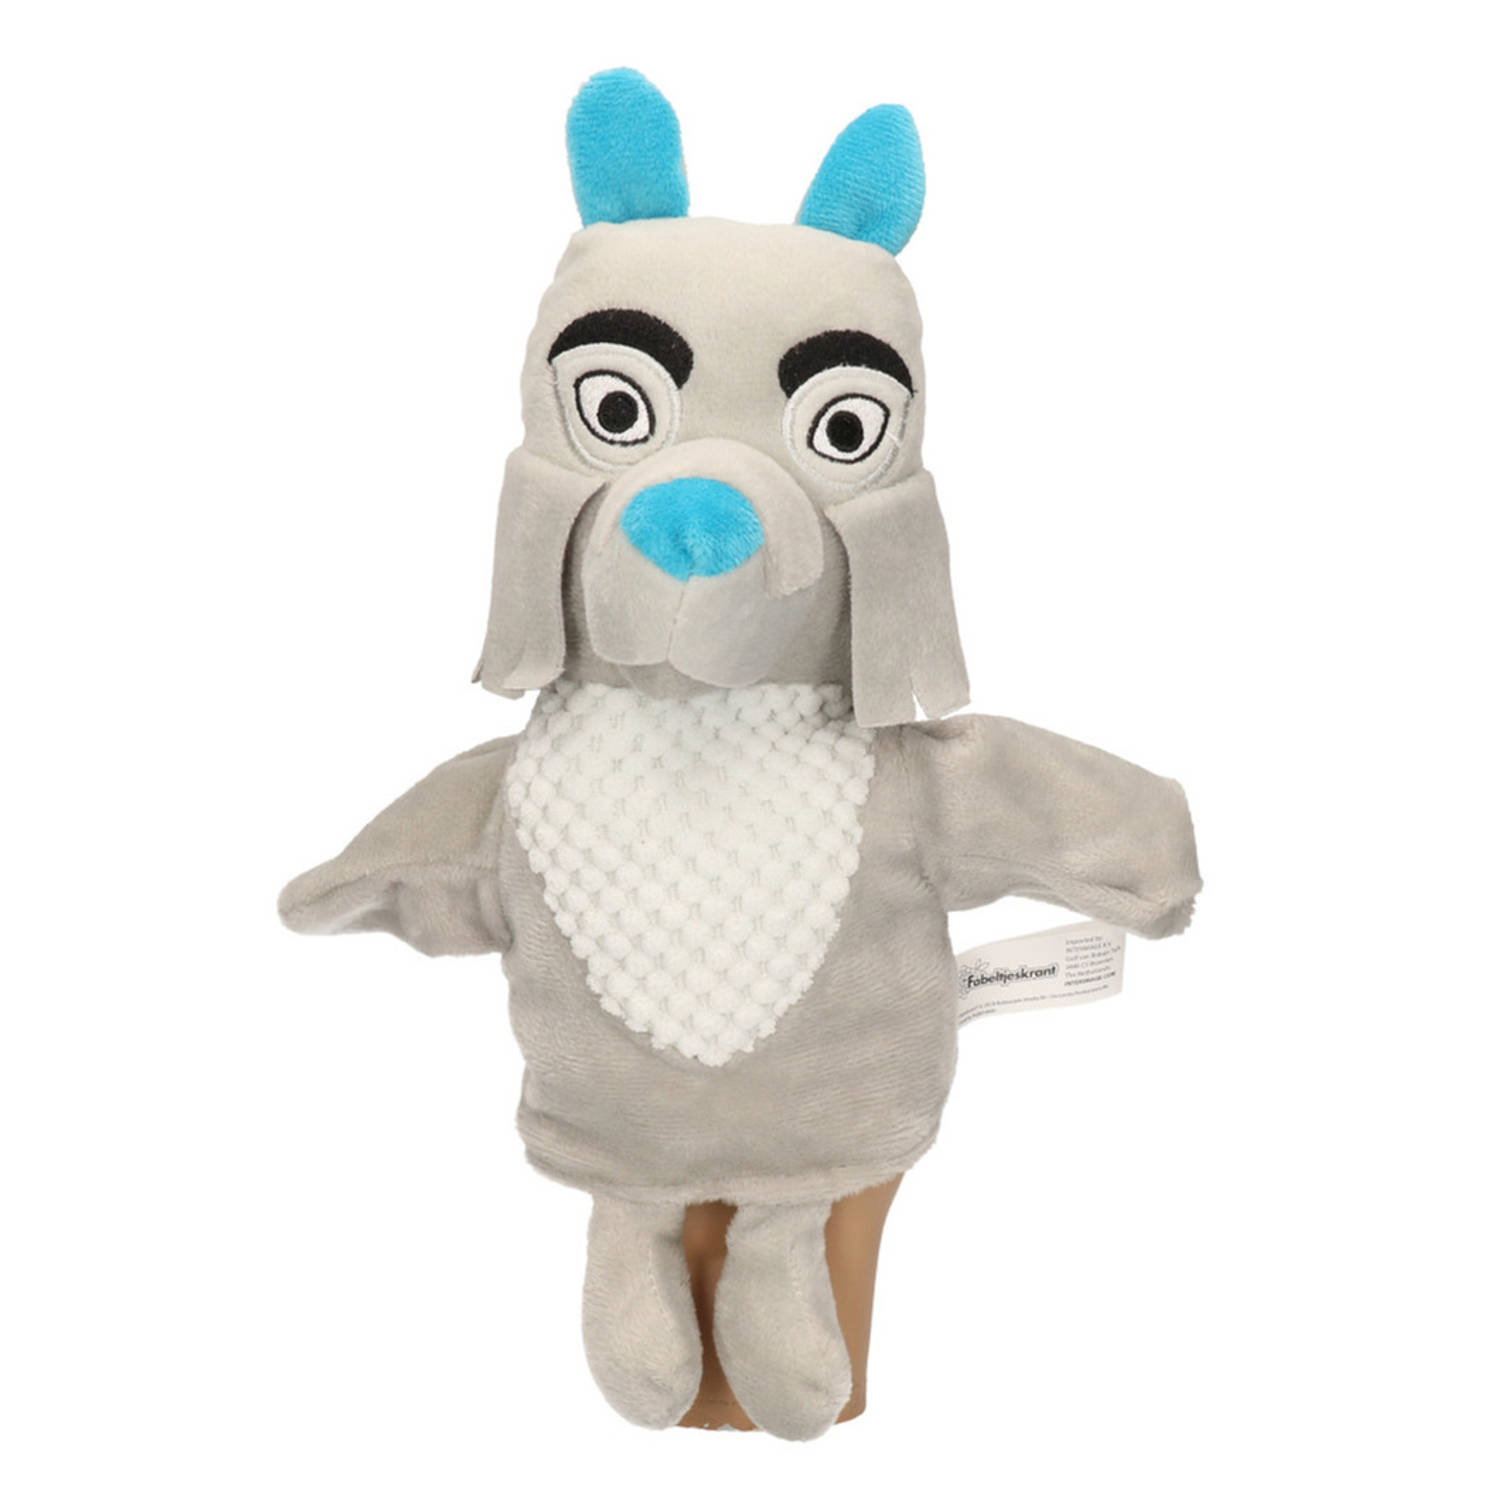 Pluche Fabeltjeskrant Bor de Wolf handpop knuffel 25 speelgoed - Handpoppen | Blokker